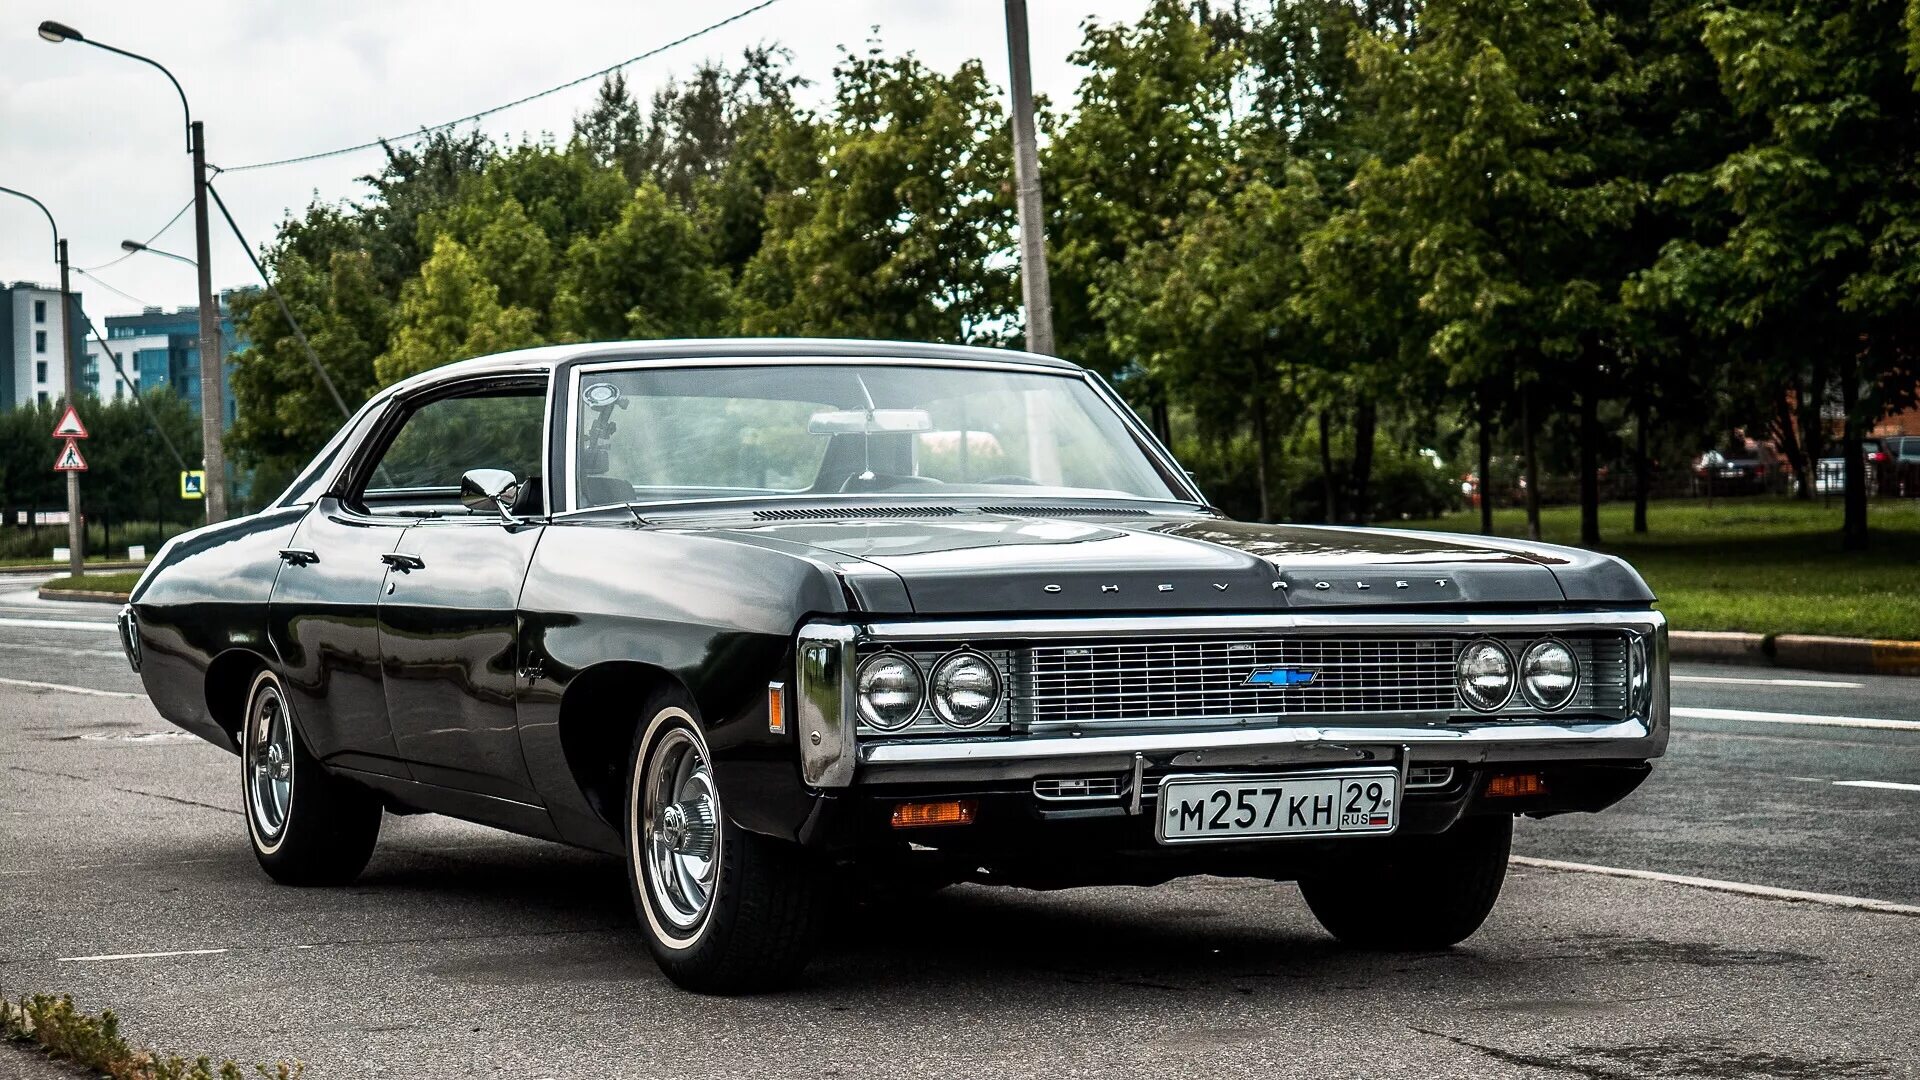 Chevrolet impala год. Chevrolet Impala 1969. Chevrolet Impala SS 1969. Шевроле Импала 69. Шевроле Импала 1969 седан.